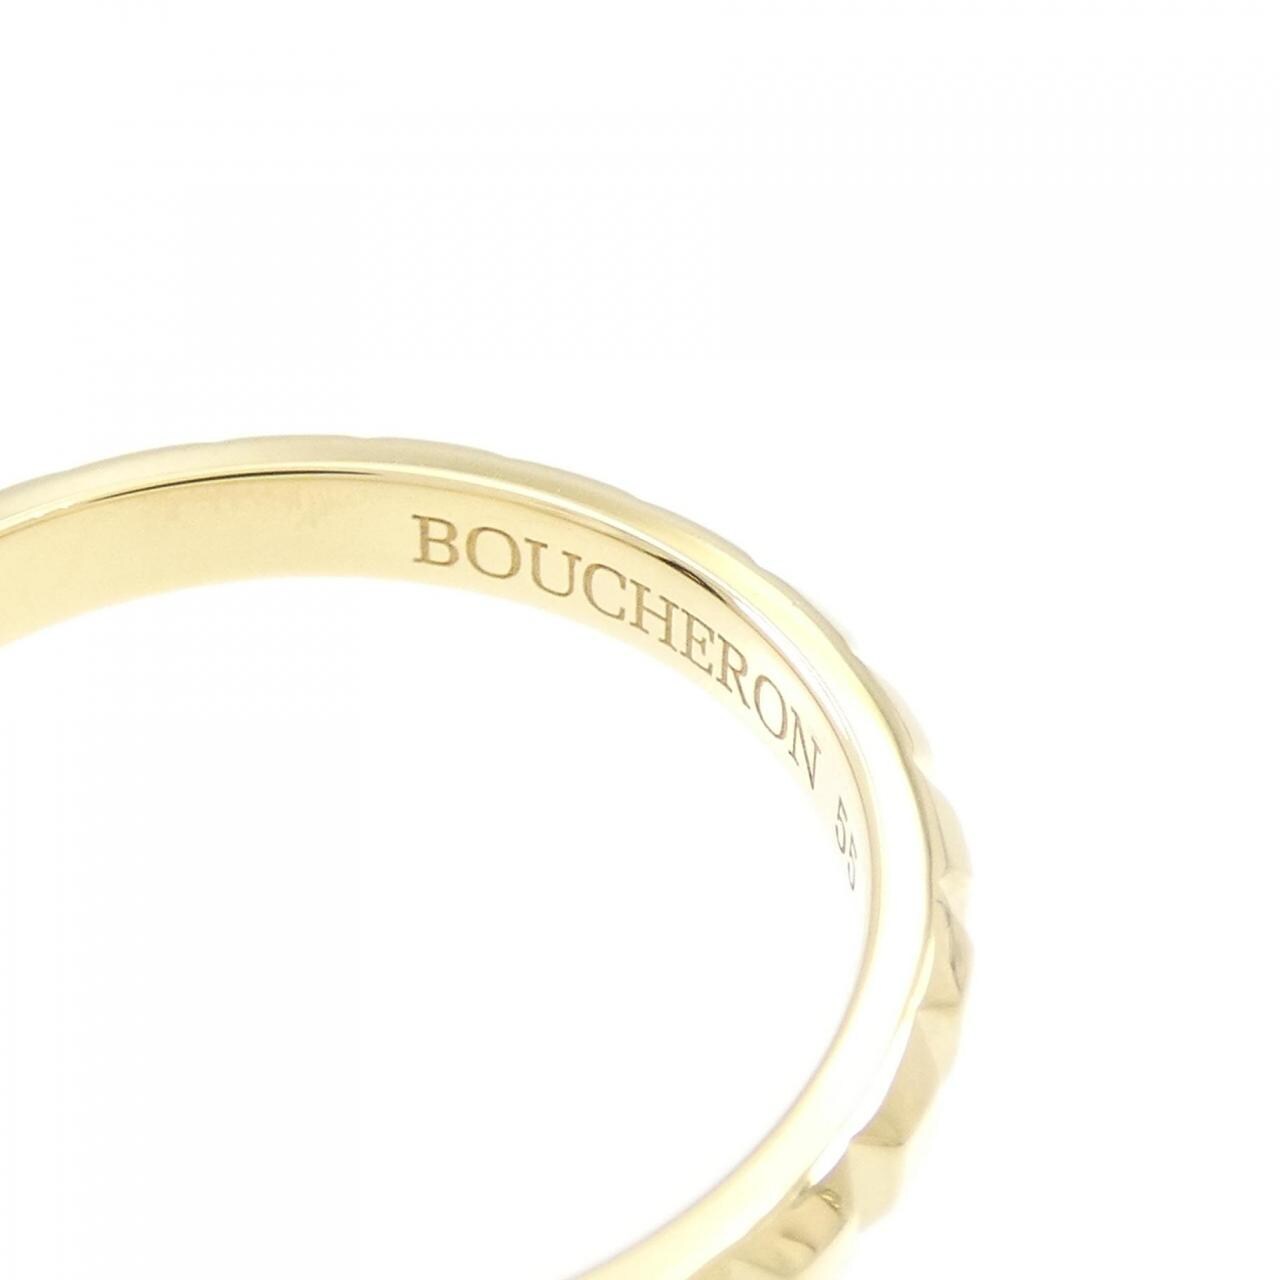 Boucheron de Paris medium ring